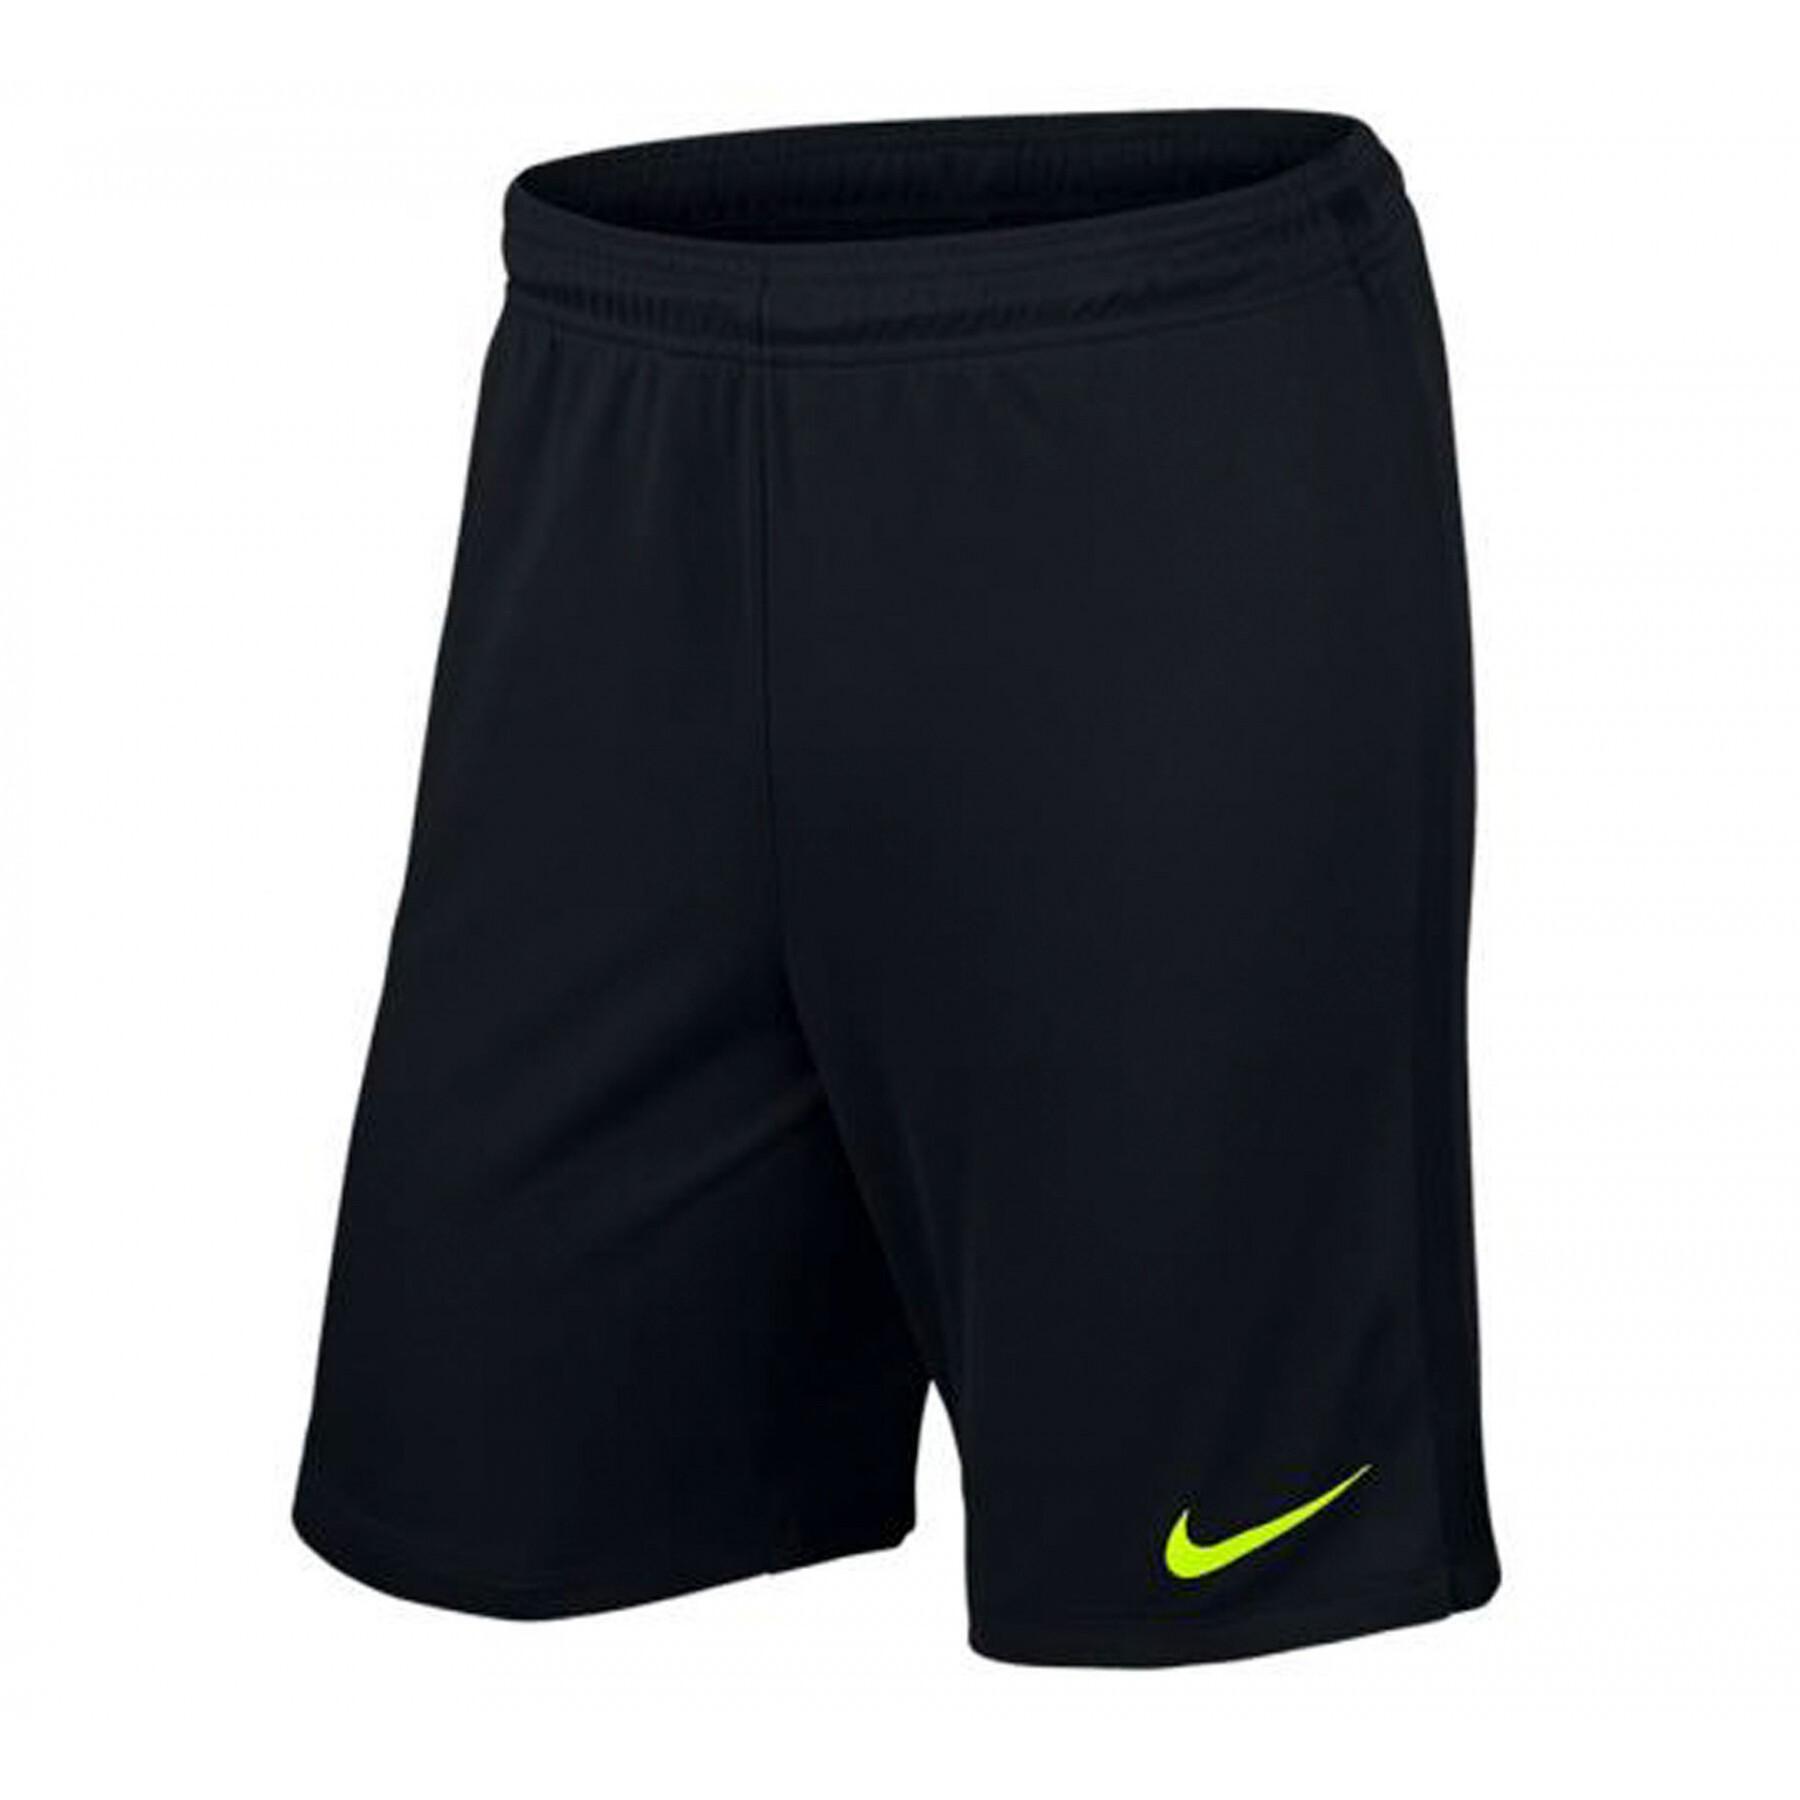 Kinder shorts Nike Dry